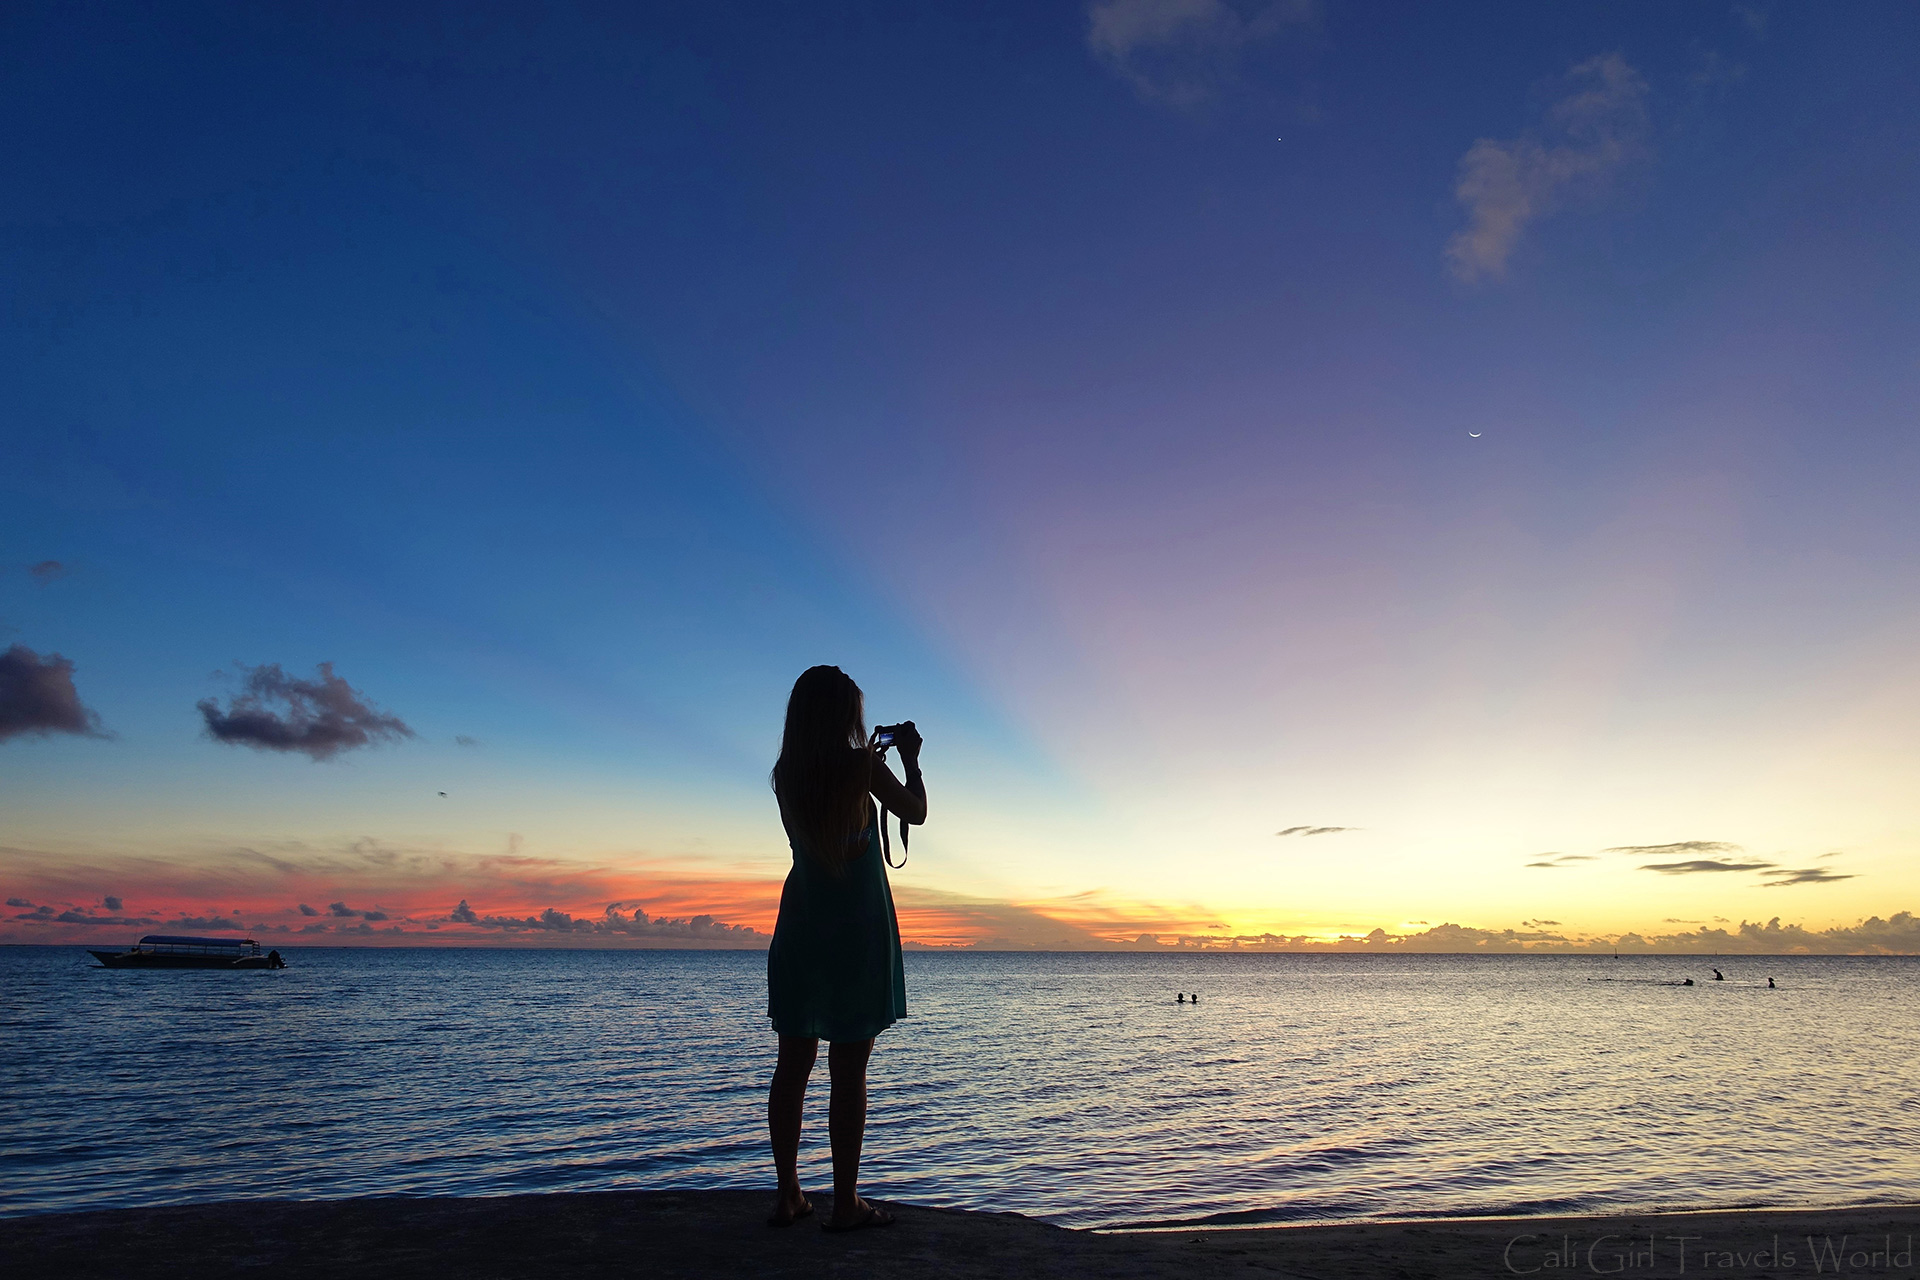 Cali Girl Travels World taking a photo on the main beach Matira on Bora Bora at Sunest.